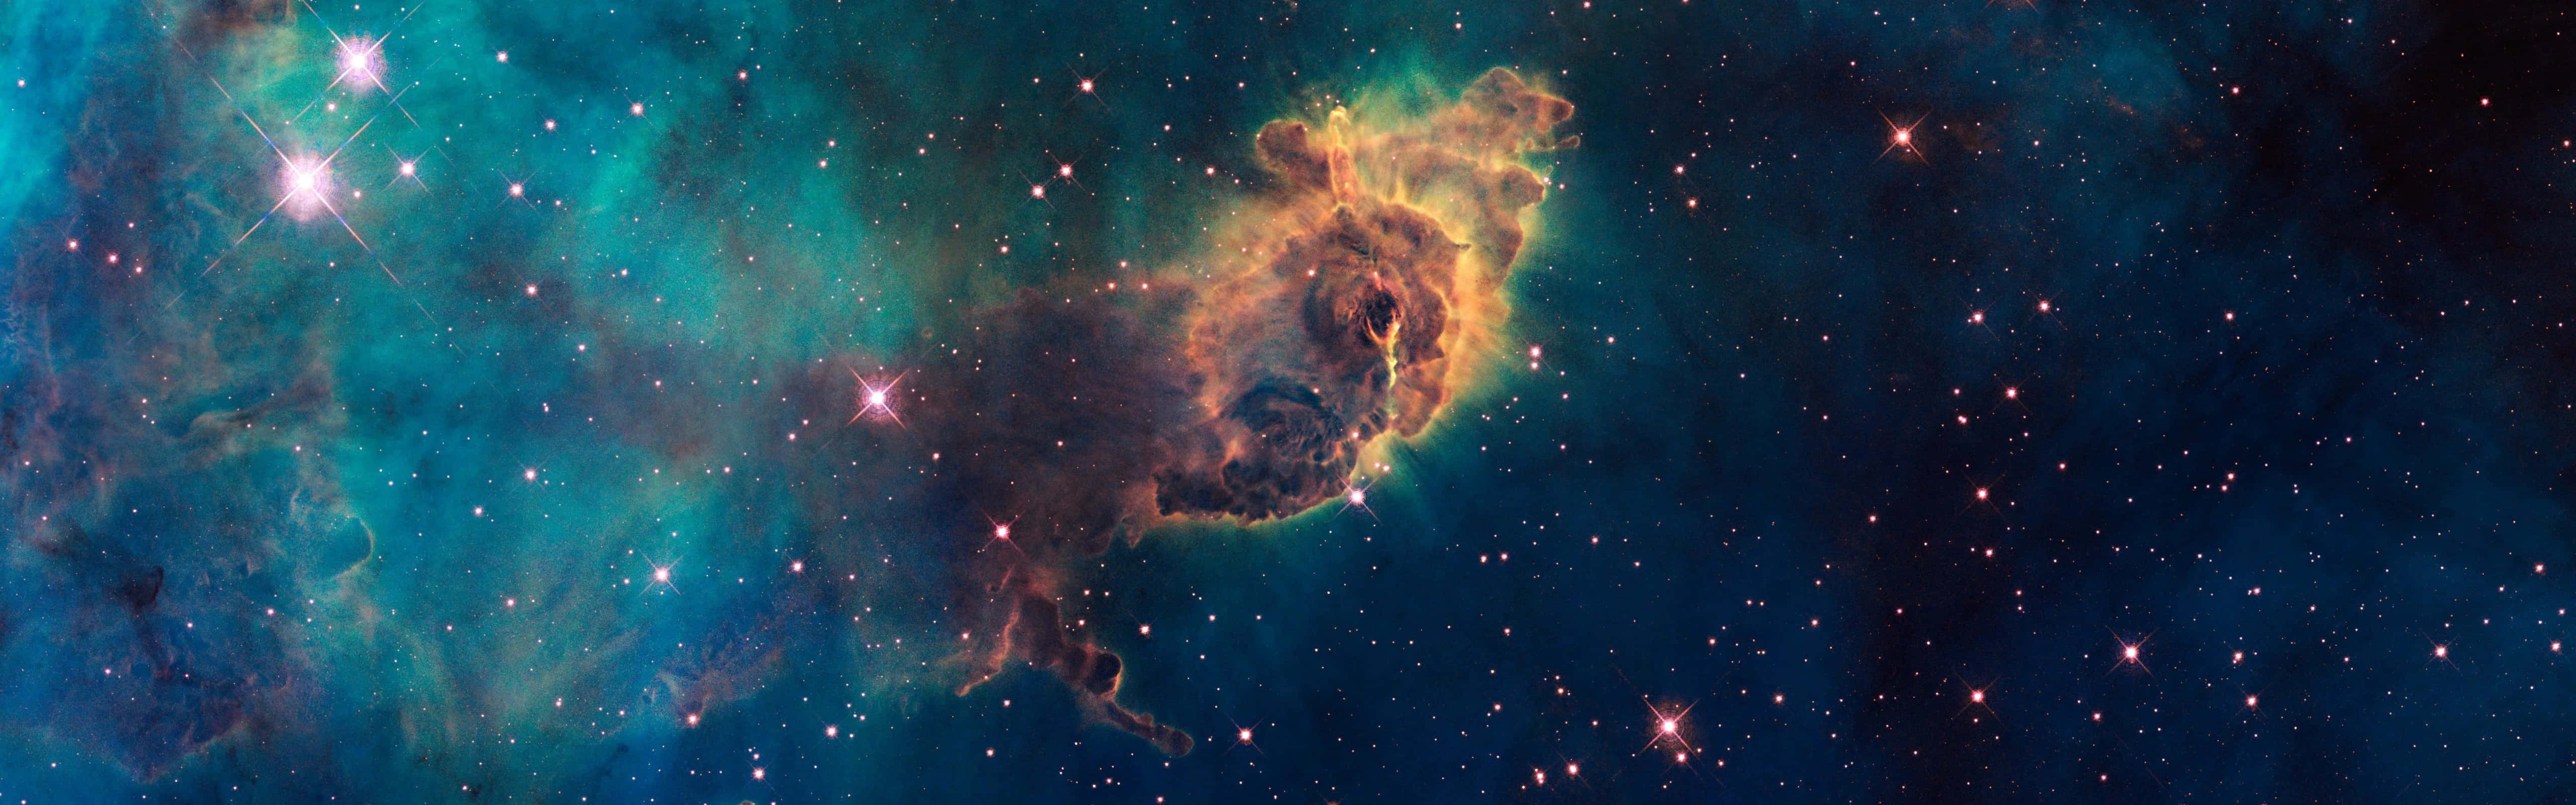 Carina Nebula 4K Wallpapers | HD Wallpapers | ID #30085